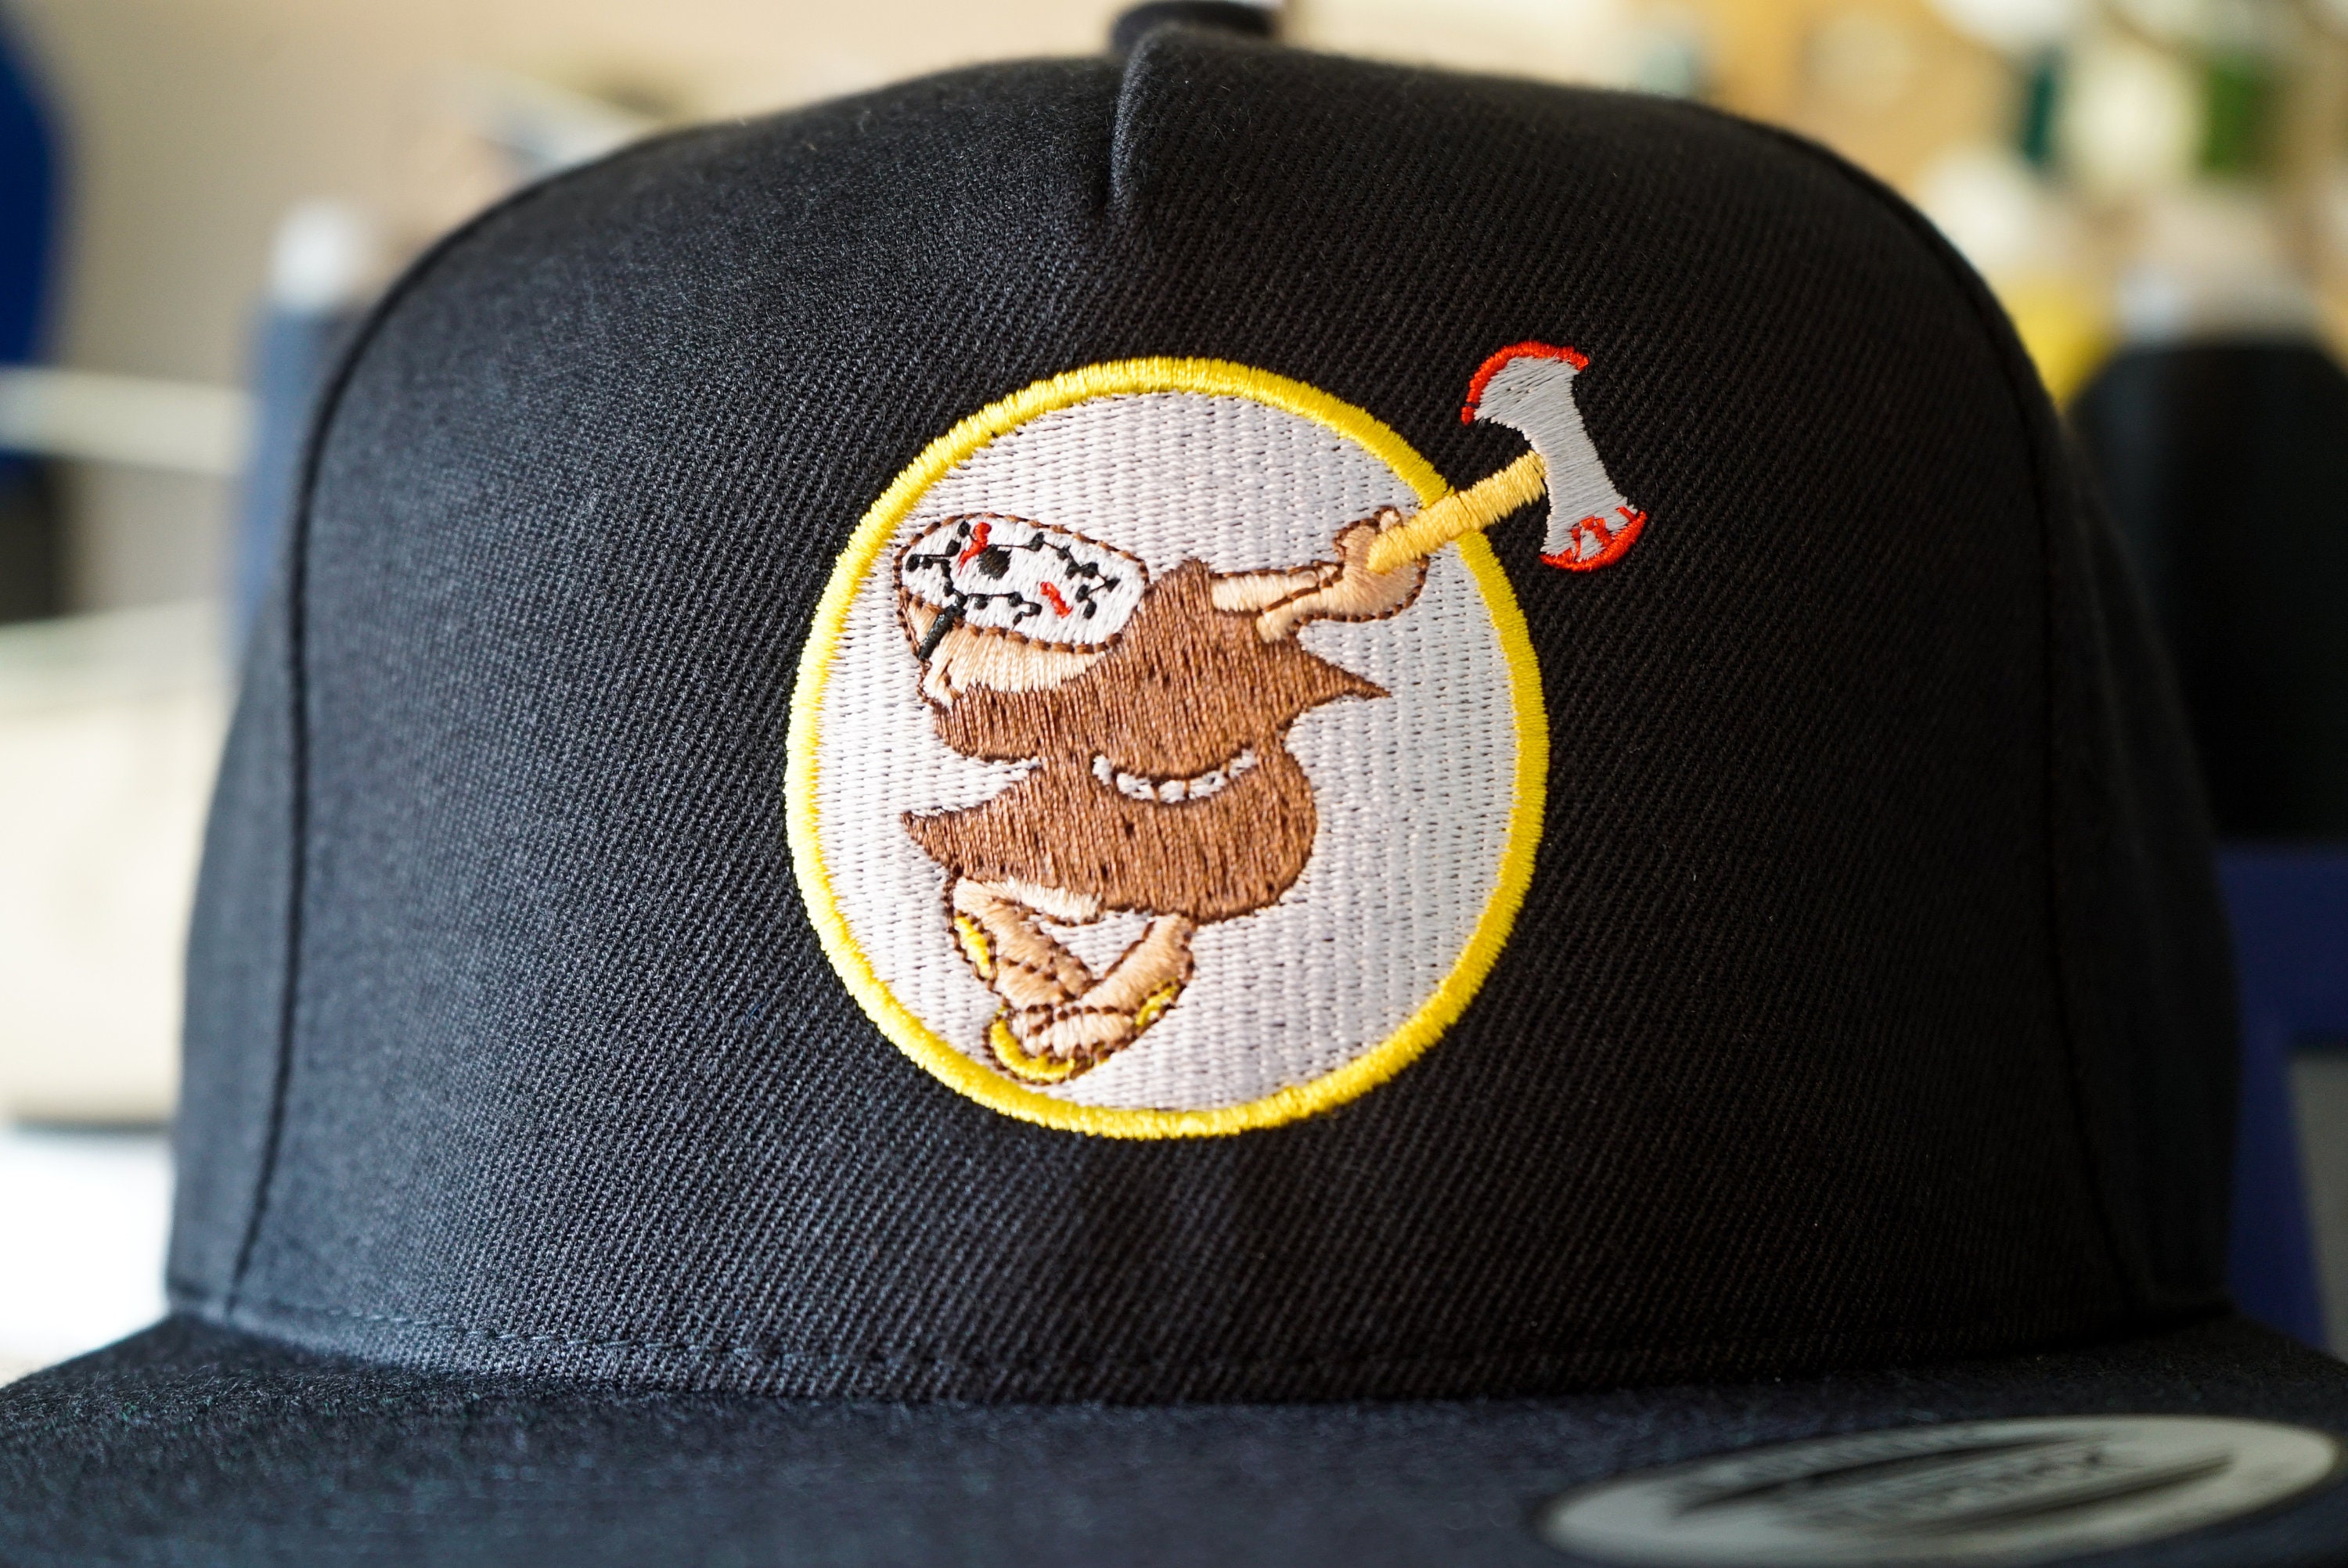 Vintage San Diego Padres American Needle Snapback Swinging OS Friar Cap Hat